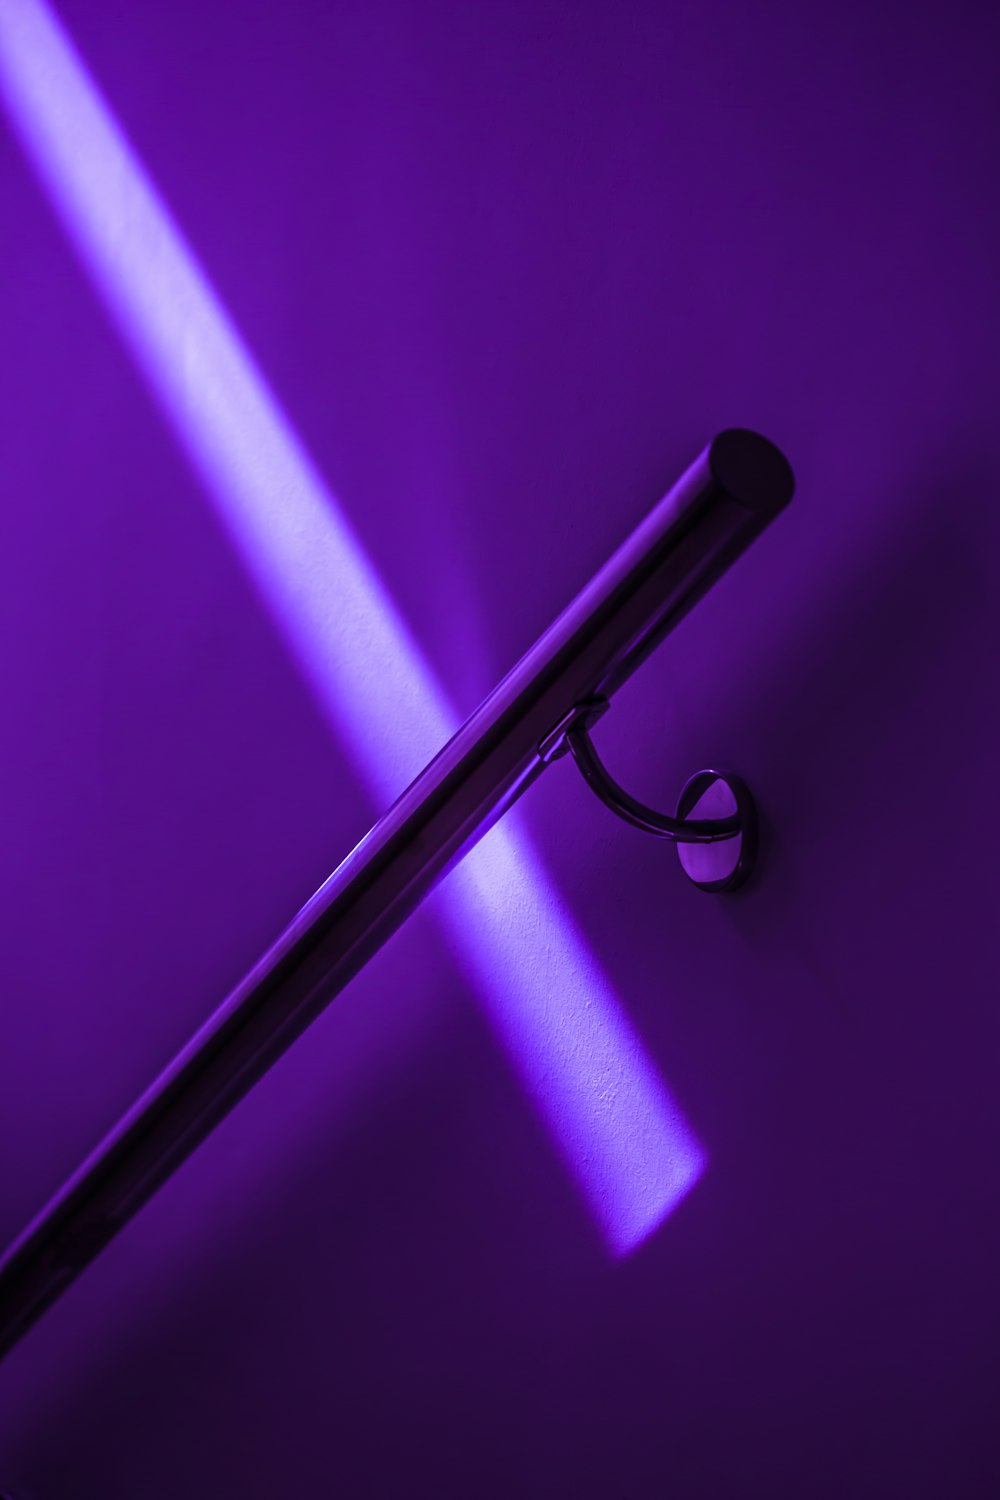 a purple umbrella with a black handle on a purple background